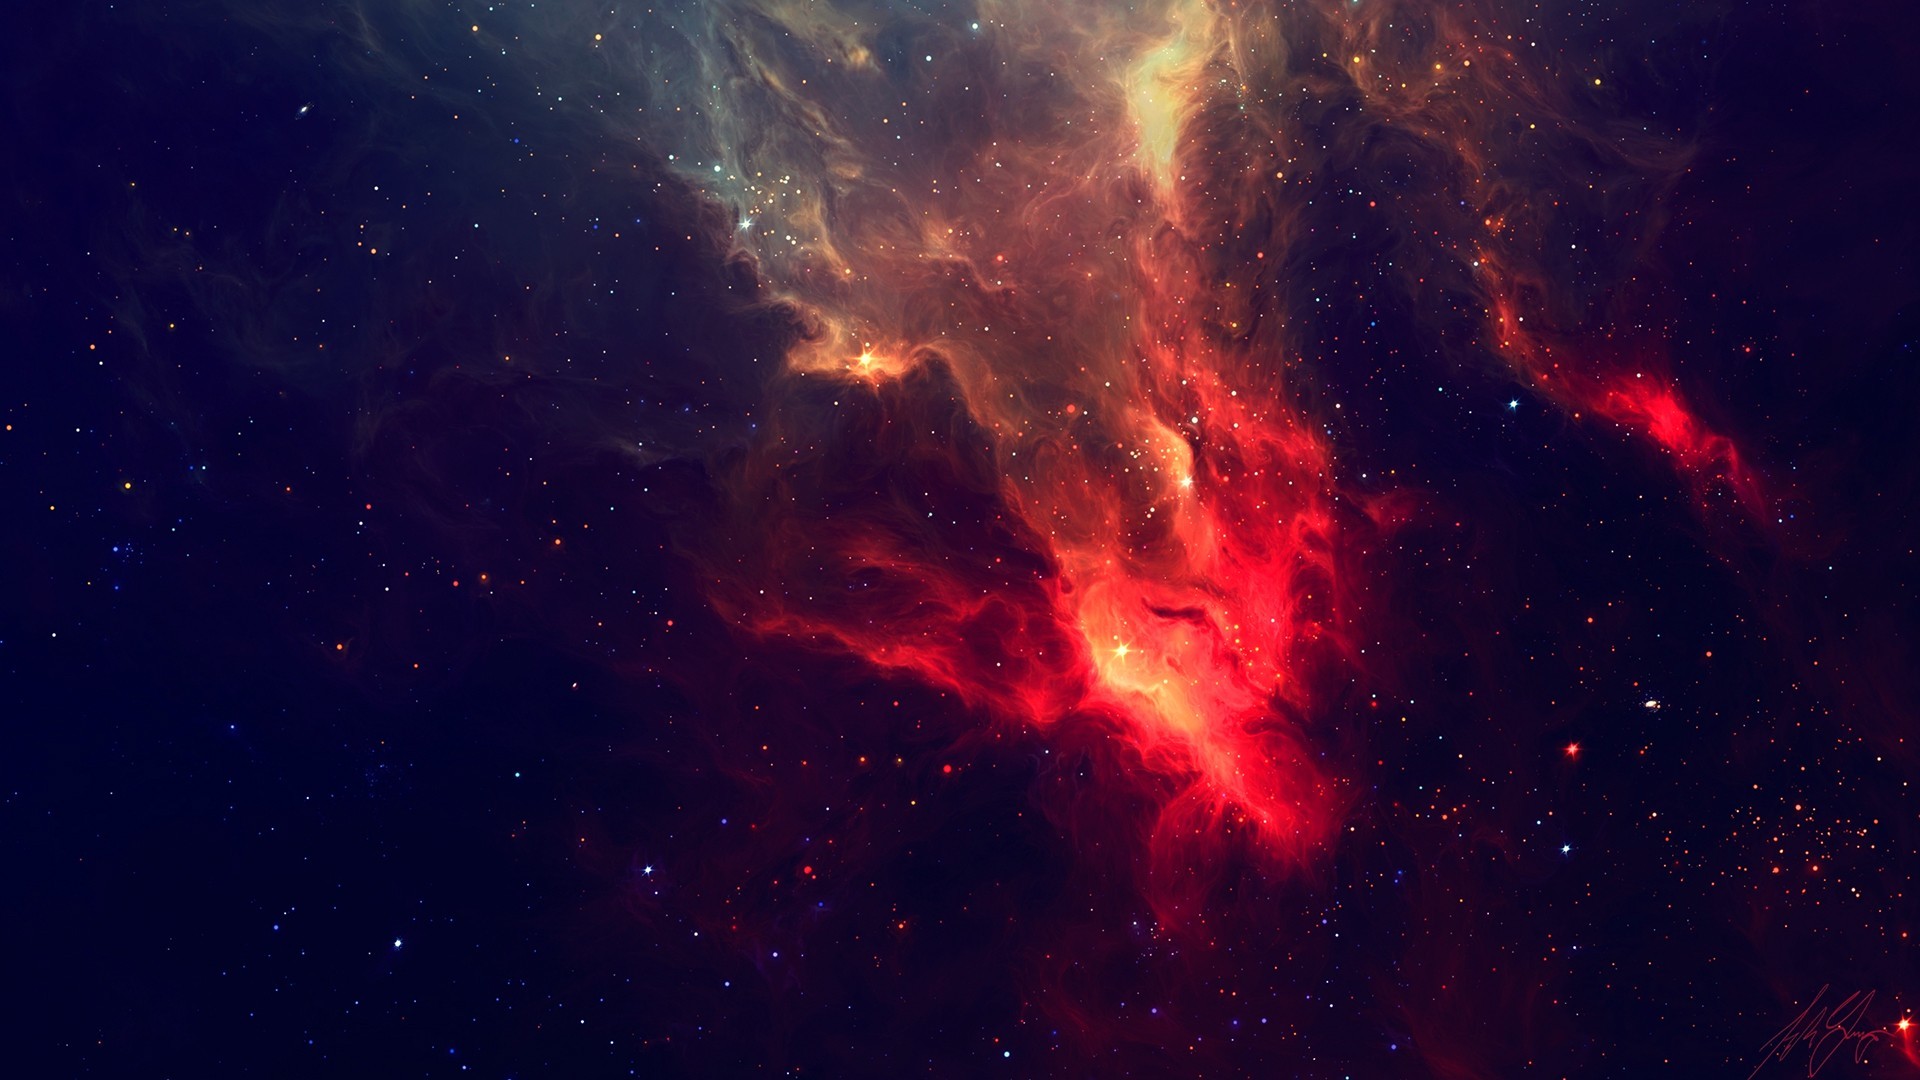 1920x1080 Explore Nebula Wallpaper, Galaxy Wallpaper, and more!